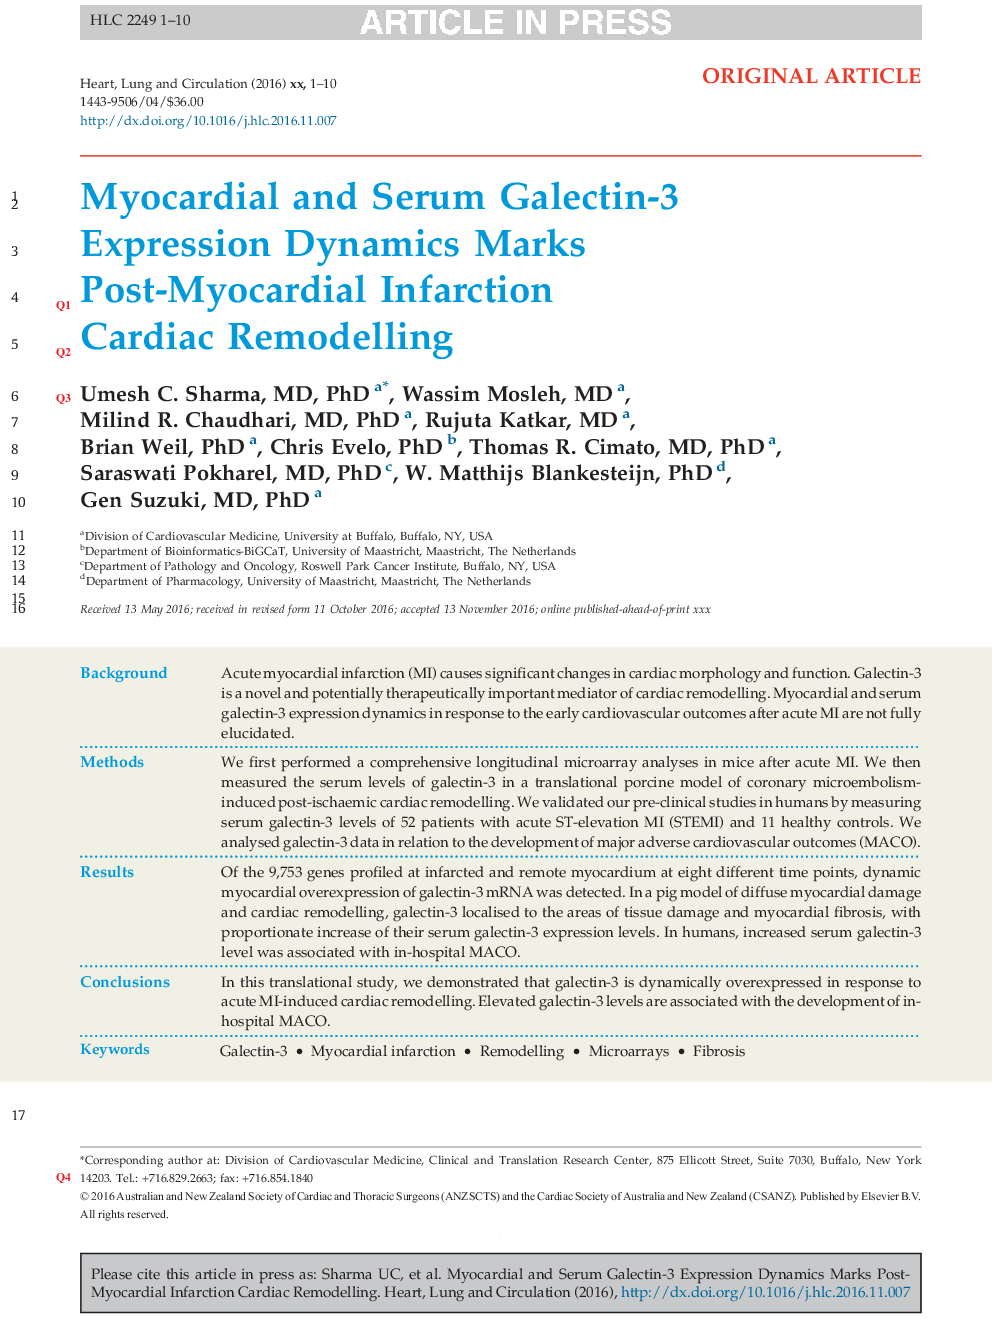 Myocardial and Serum Galectin-3 Expression Dynamics Marks Post-Myocardial Infarction Cardiac Remodelling